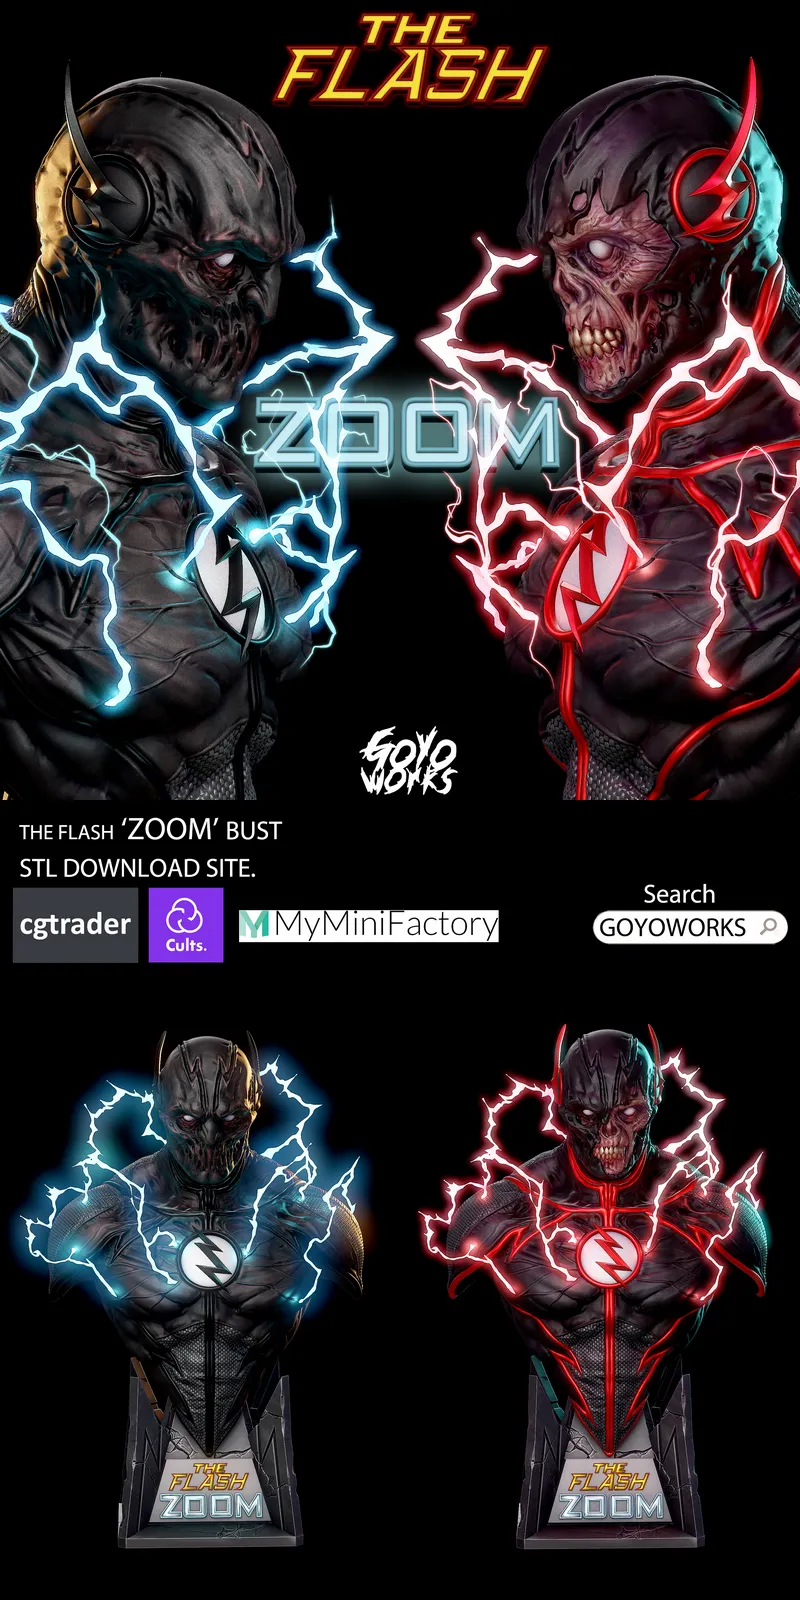 The flash villain ZOOM